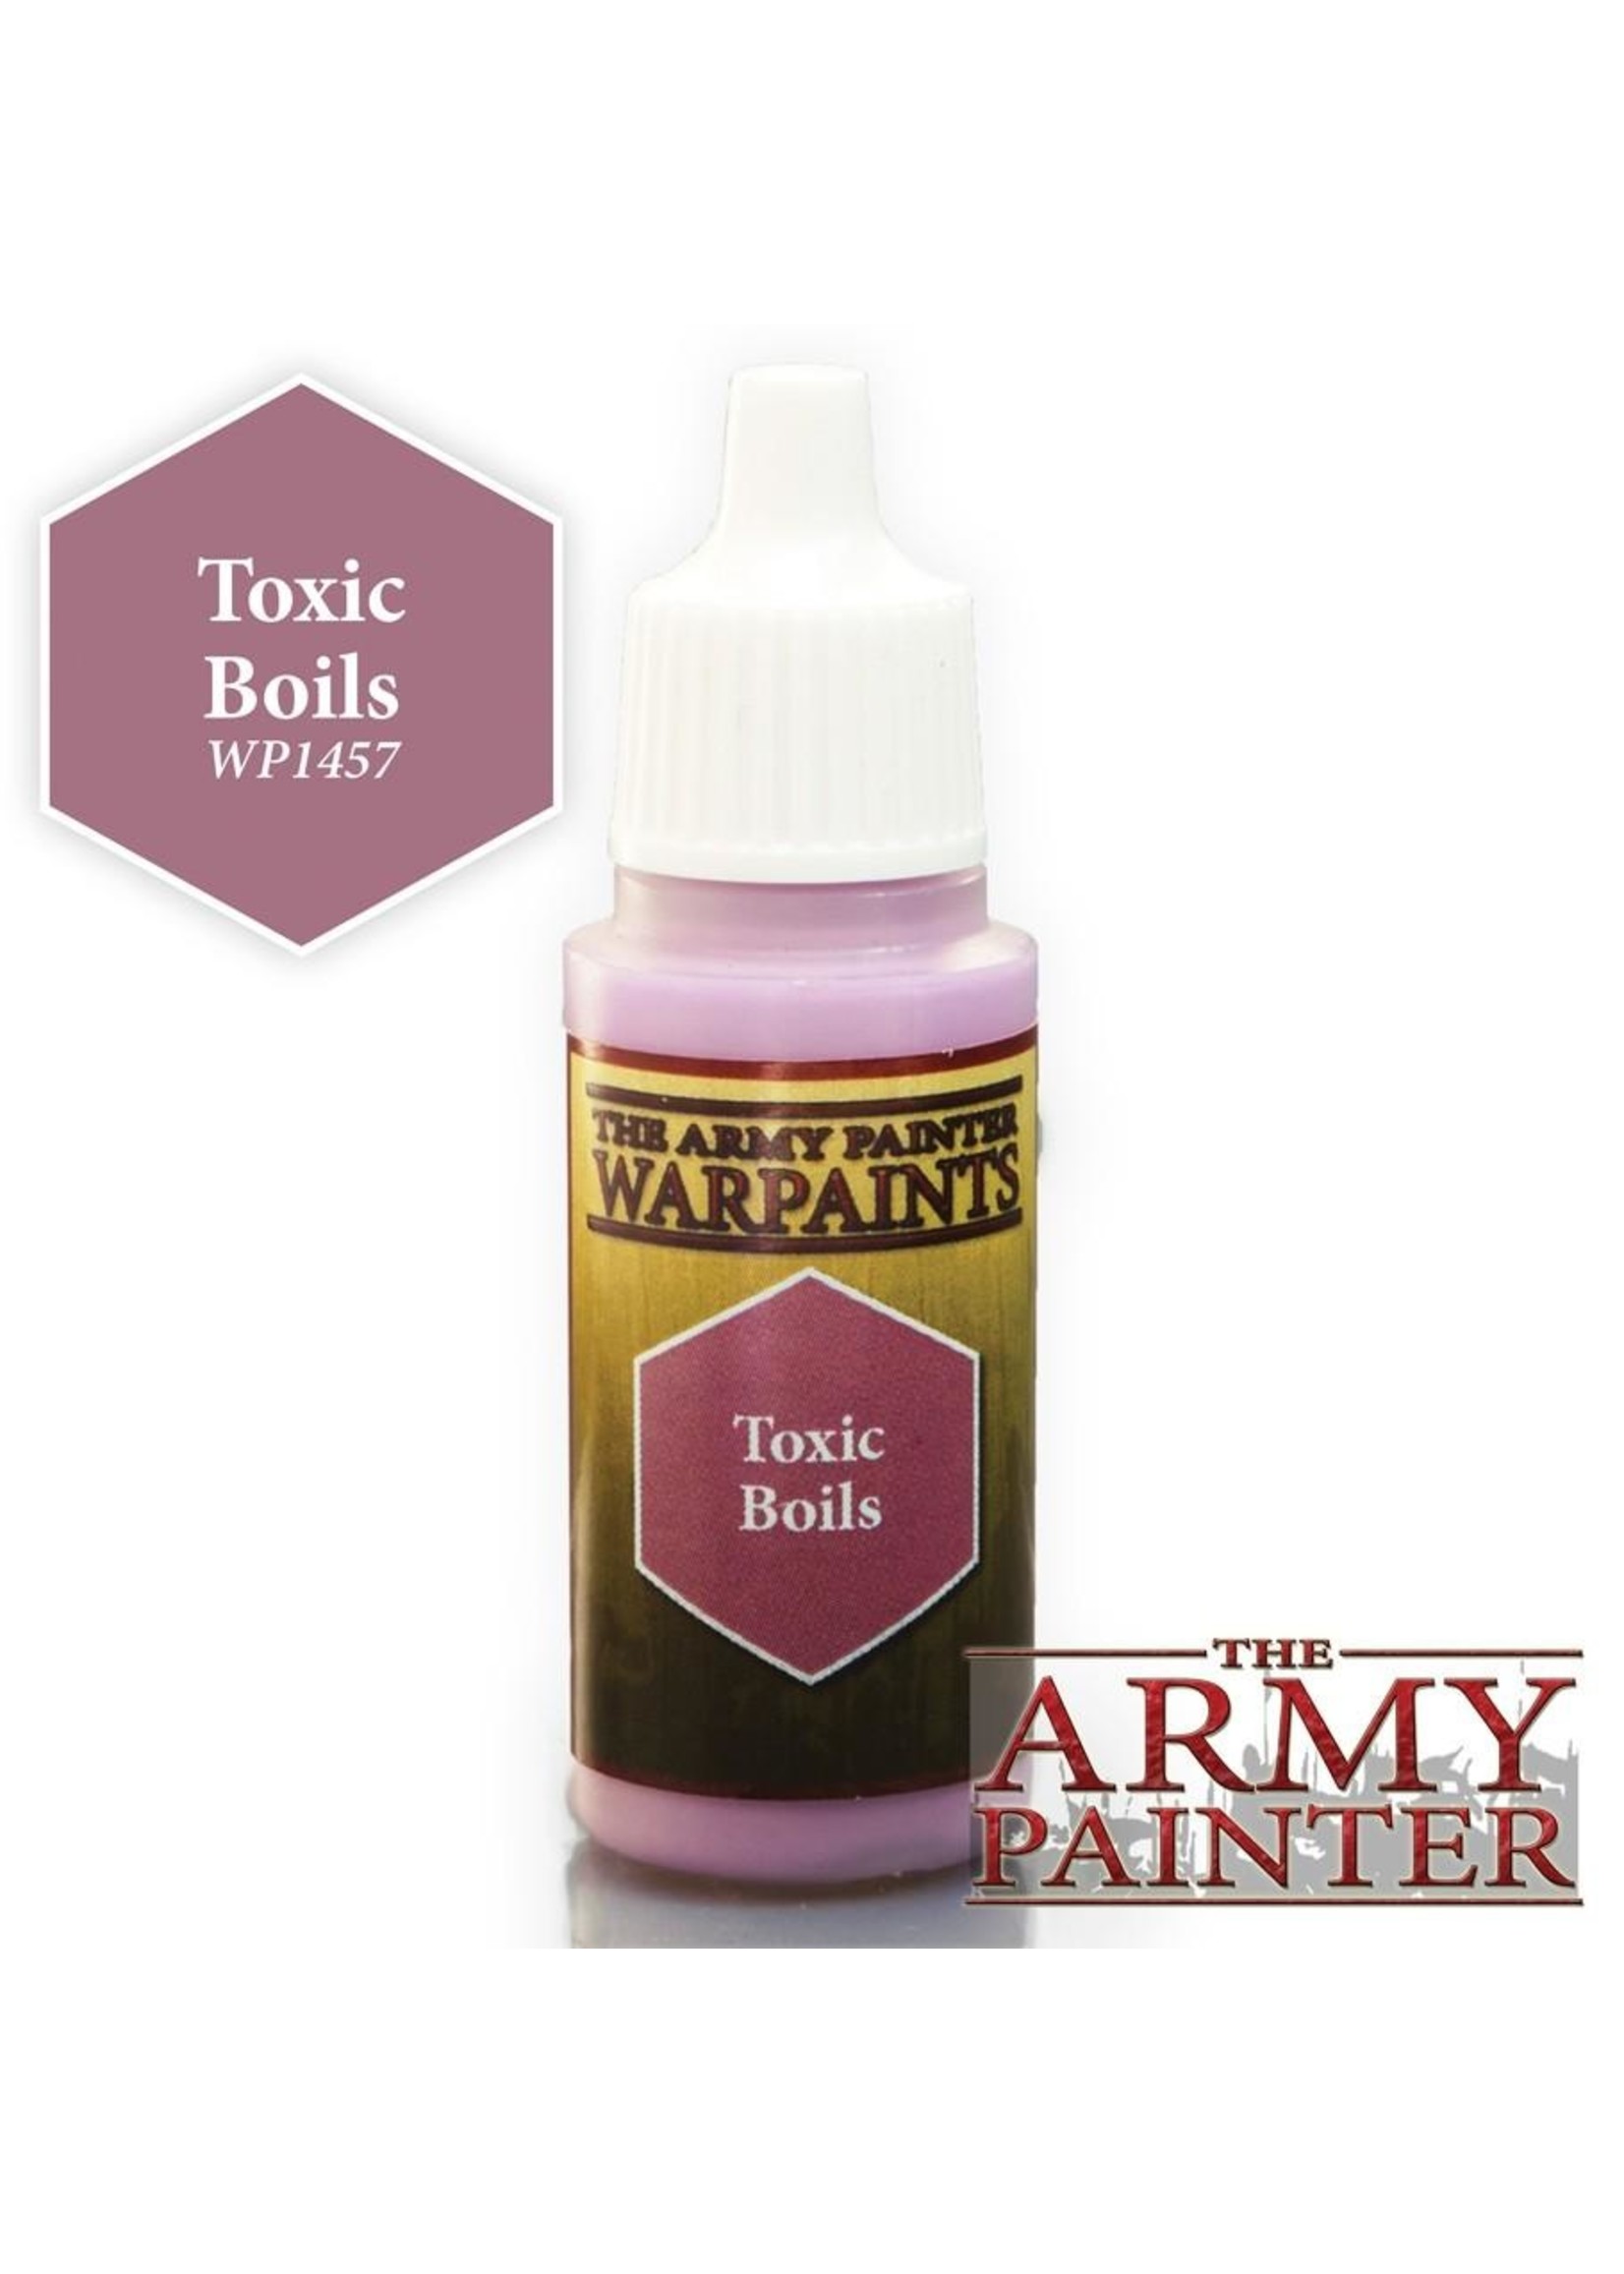 The Army Painter Acrylics Warpaints Toxic Boils